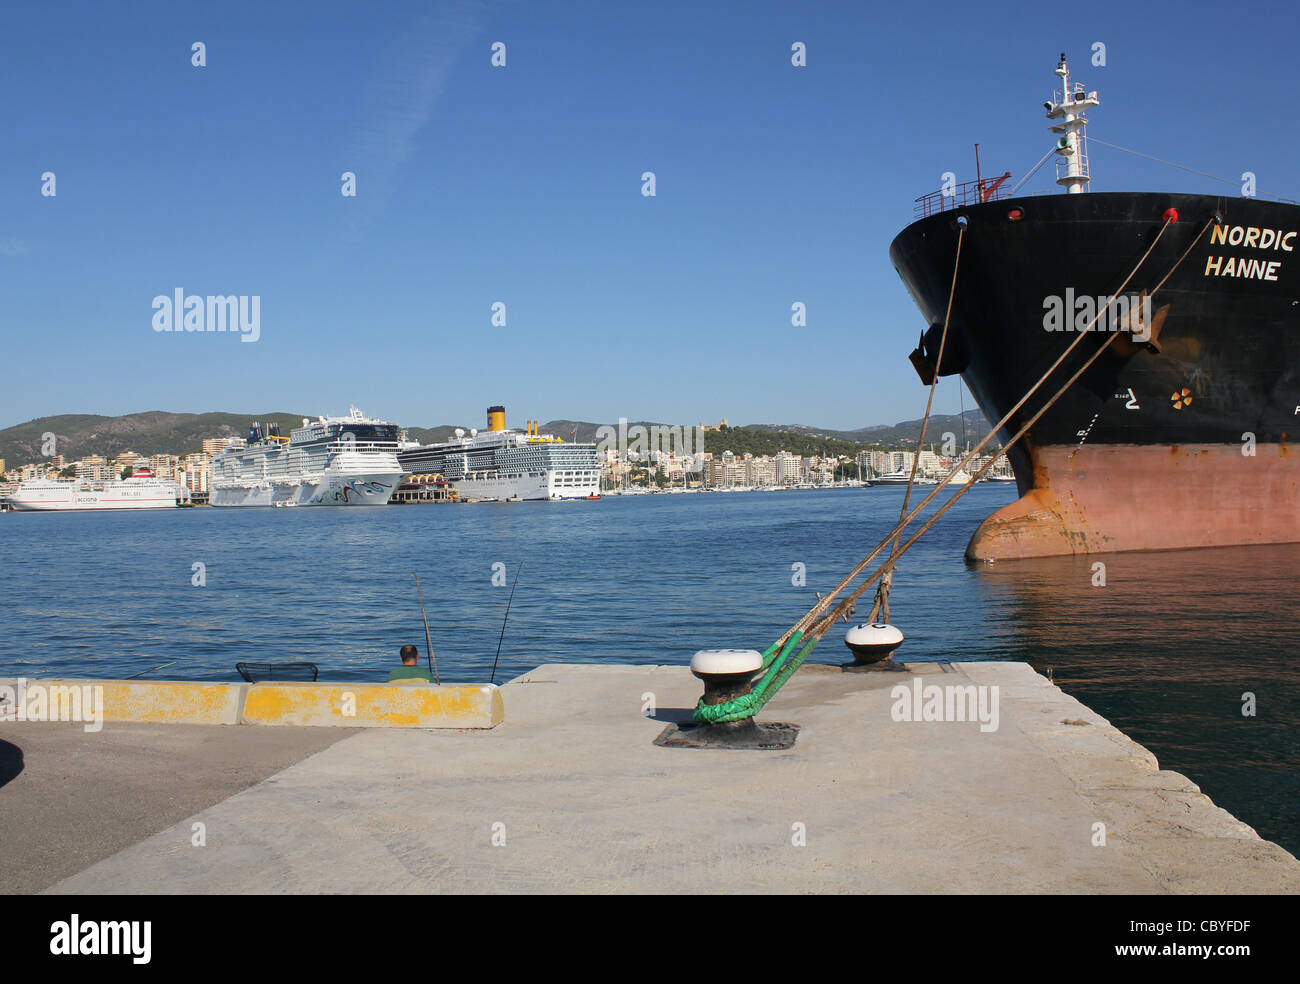 Petrolium Product carrier 'Nordic Hanne' across to Cruise Ships 'Norwegian Epic' and Costa Deliziosa'  Port of Palma de Mallorca Stock Photo